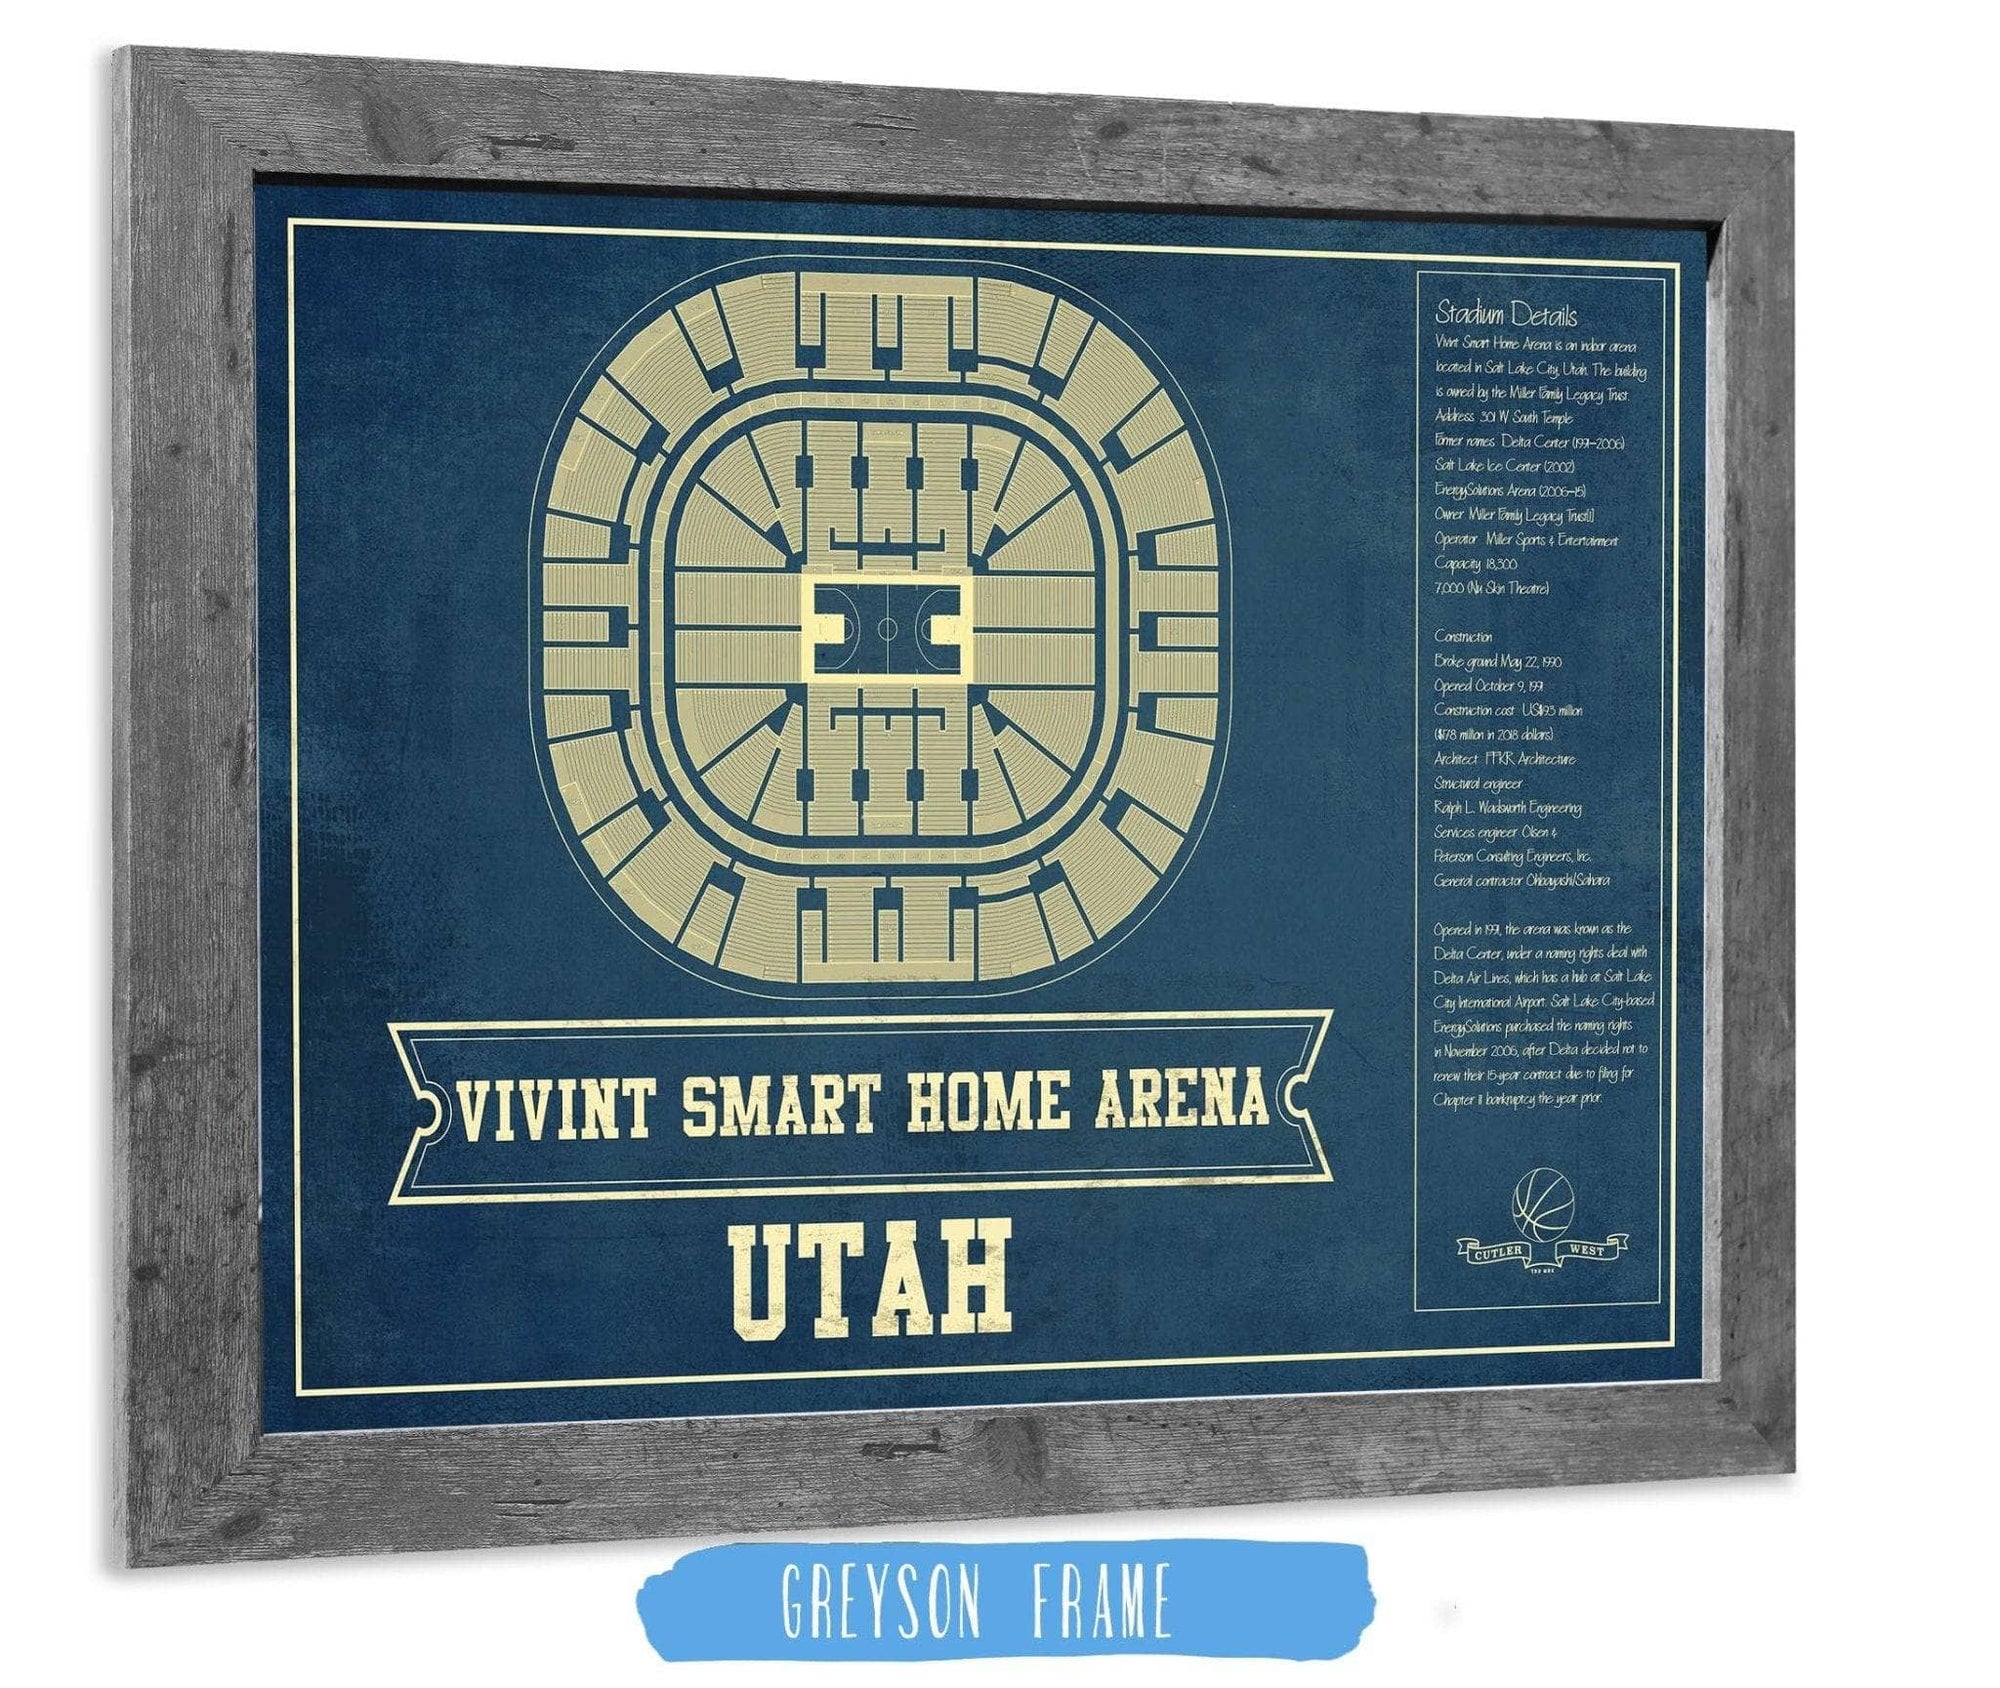 Cutler West Basketball Collection 14" x 11" / Greyson Frame Utah Jazz - Vivint Smart Home Arena Seating Chart Vintage Art Print 933350176_77758